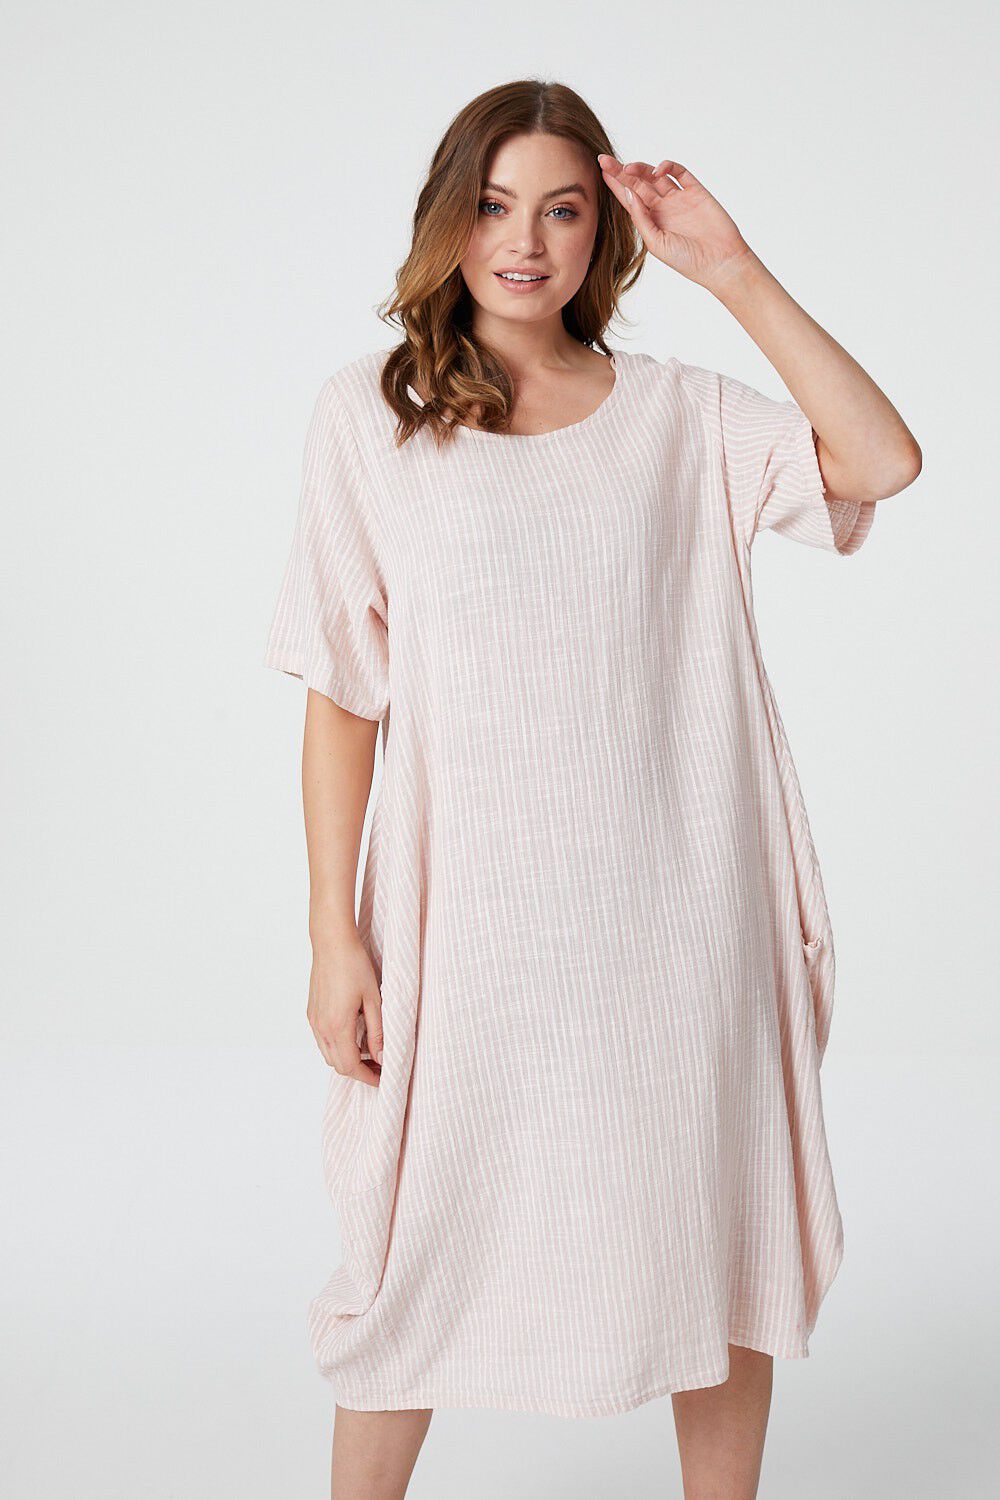 Izabel London Striped Short Sleeve Tunic Dress - Pink, Size: S